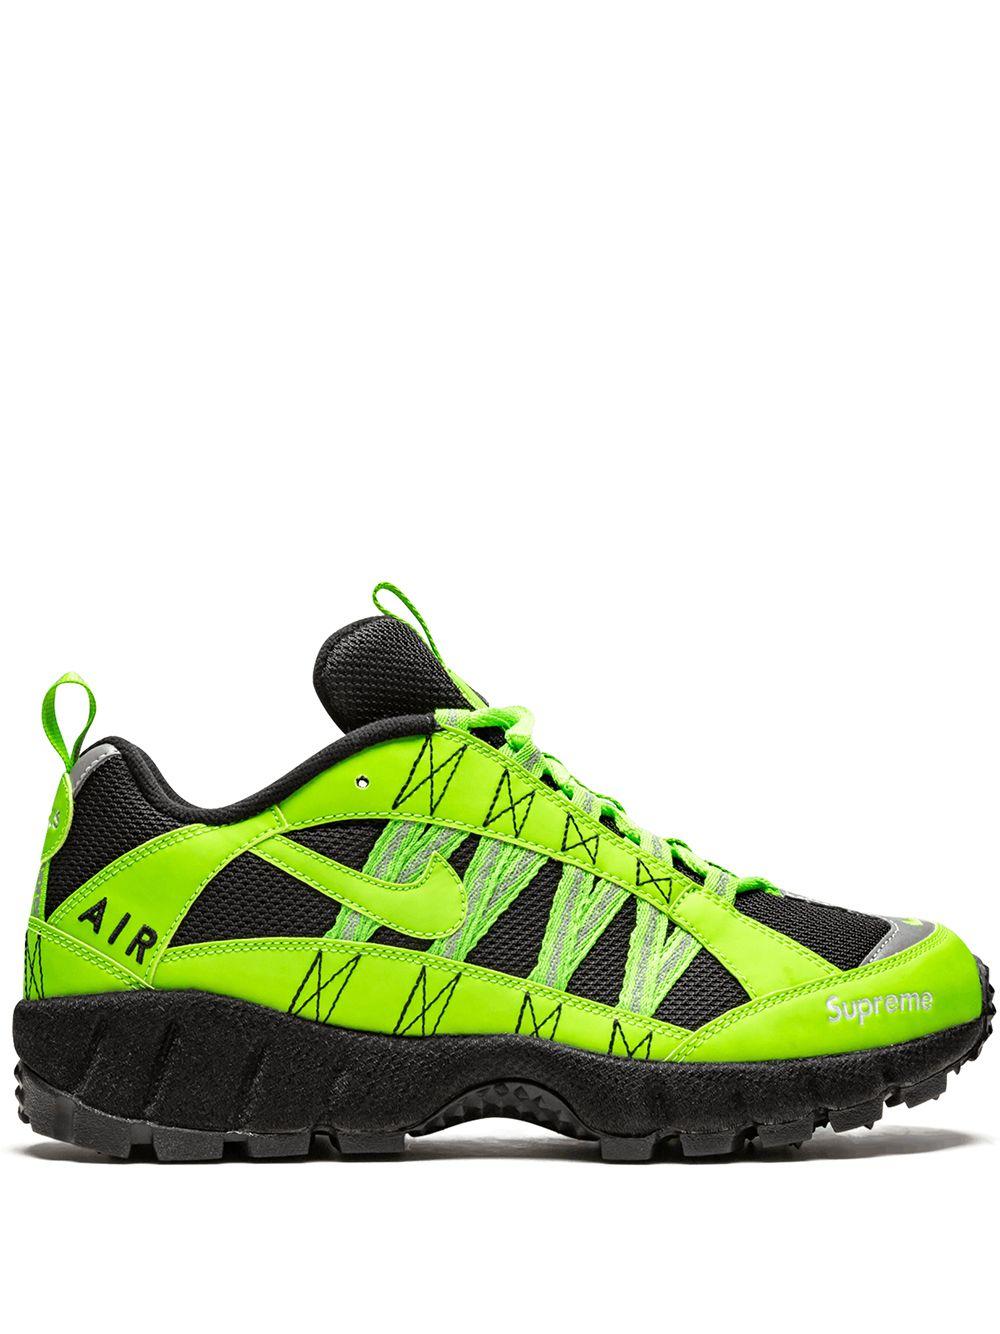 Nike Synthetic Air Humara '17 / Supreme Sneakers in Green for Men - Lyst